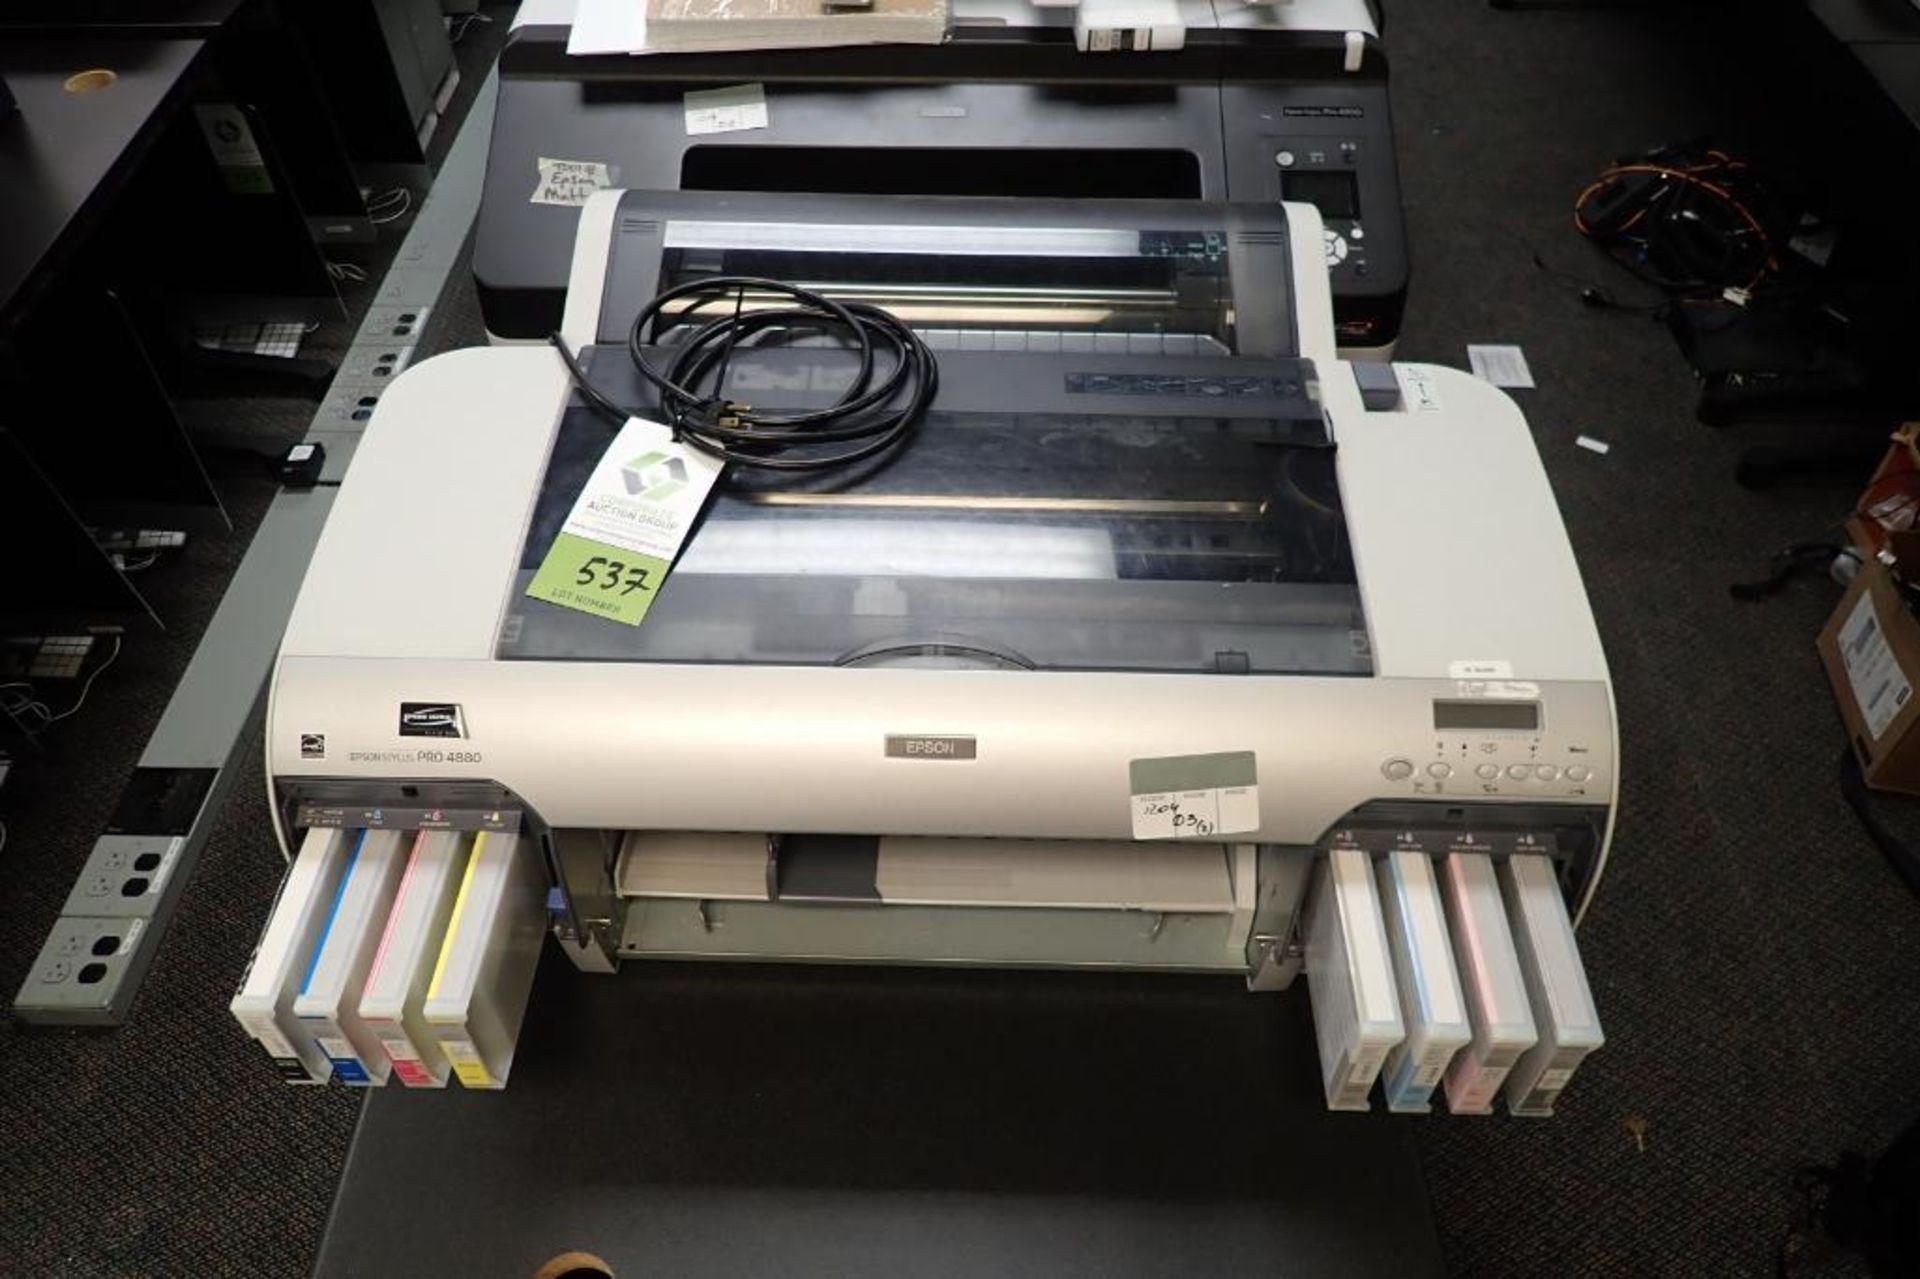 Epson stylus pro 4880 ink jet printer